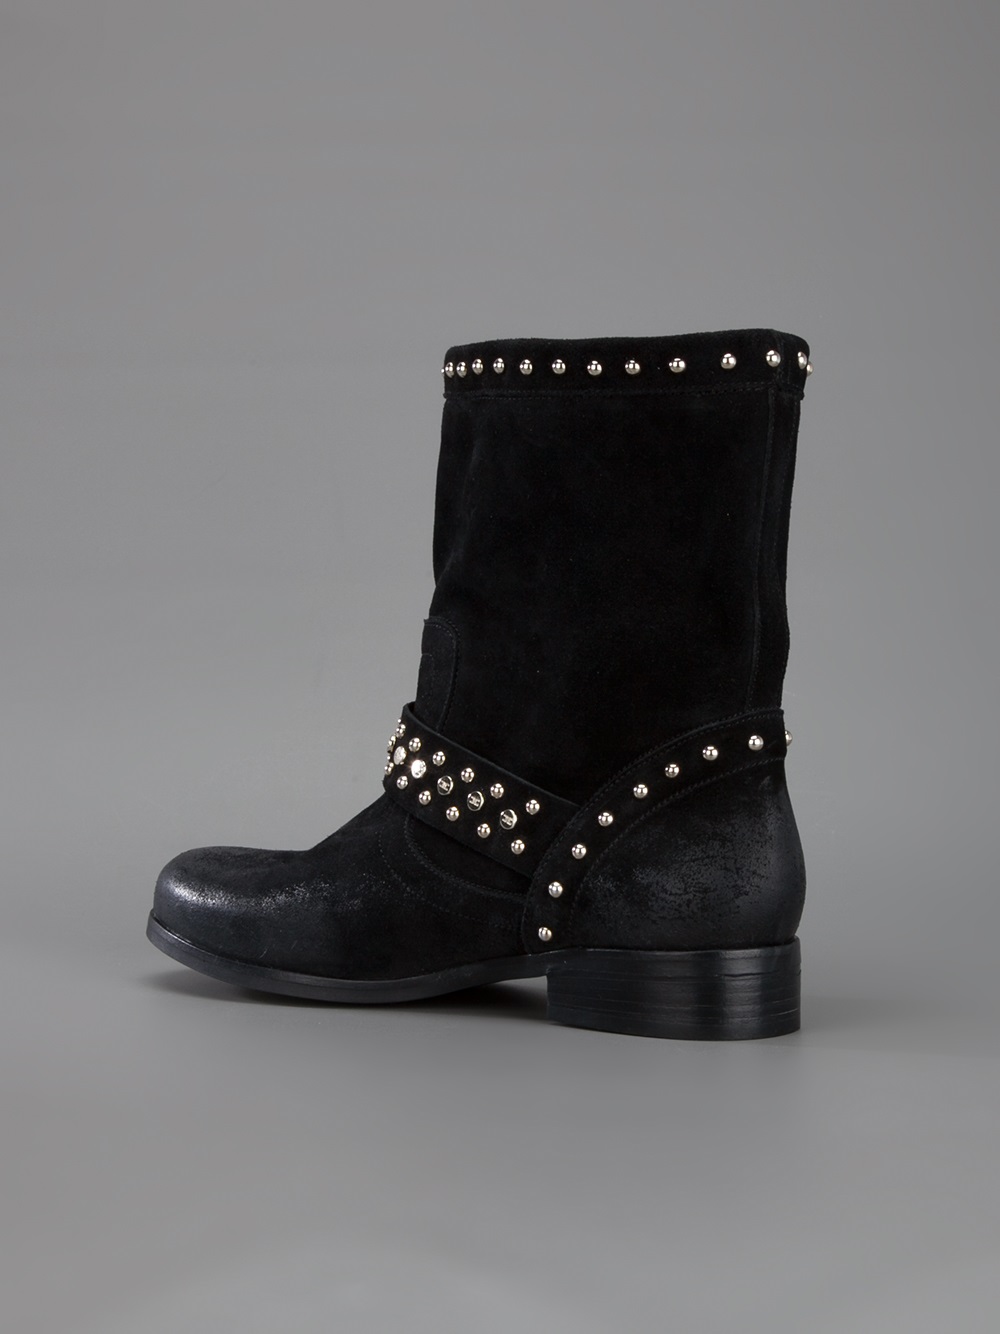 Elisabetta Franchi Studded Calf Boot in Black - Lyst